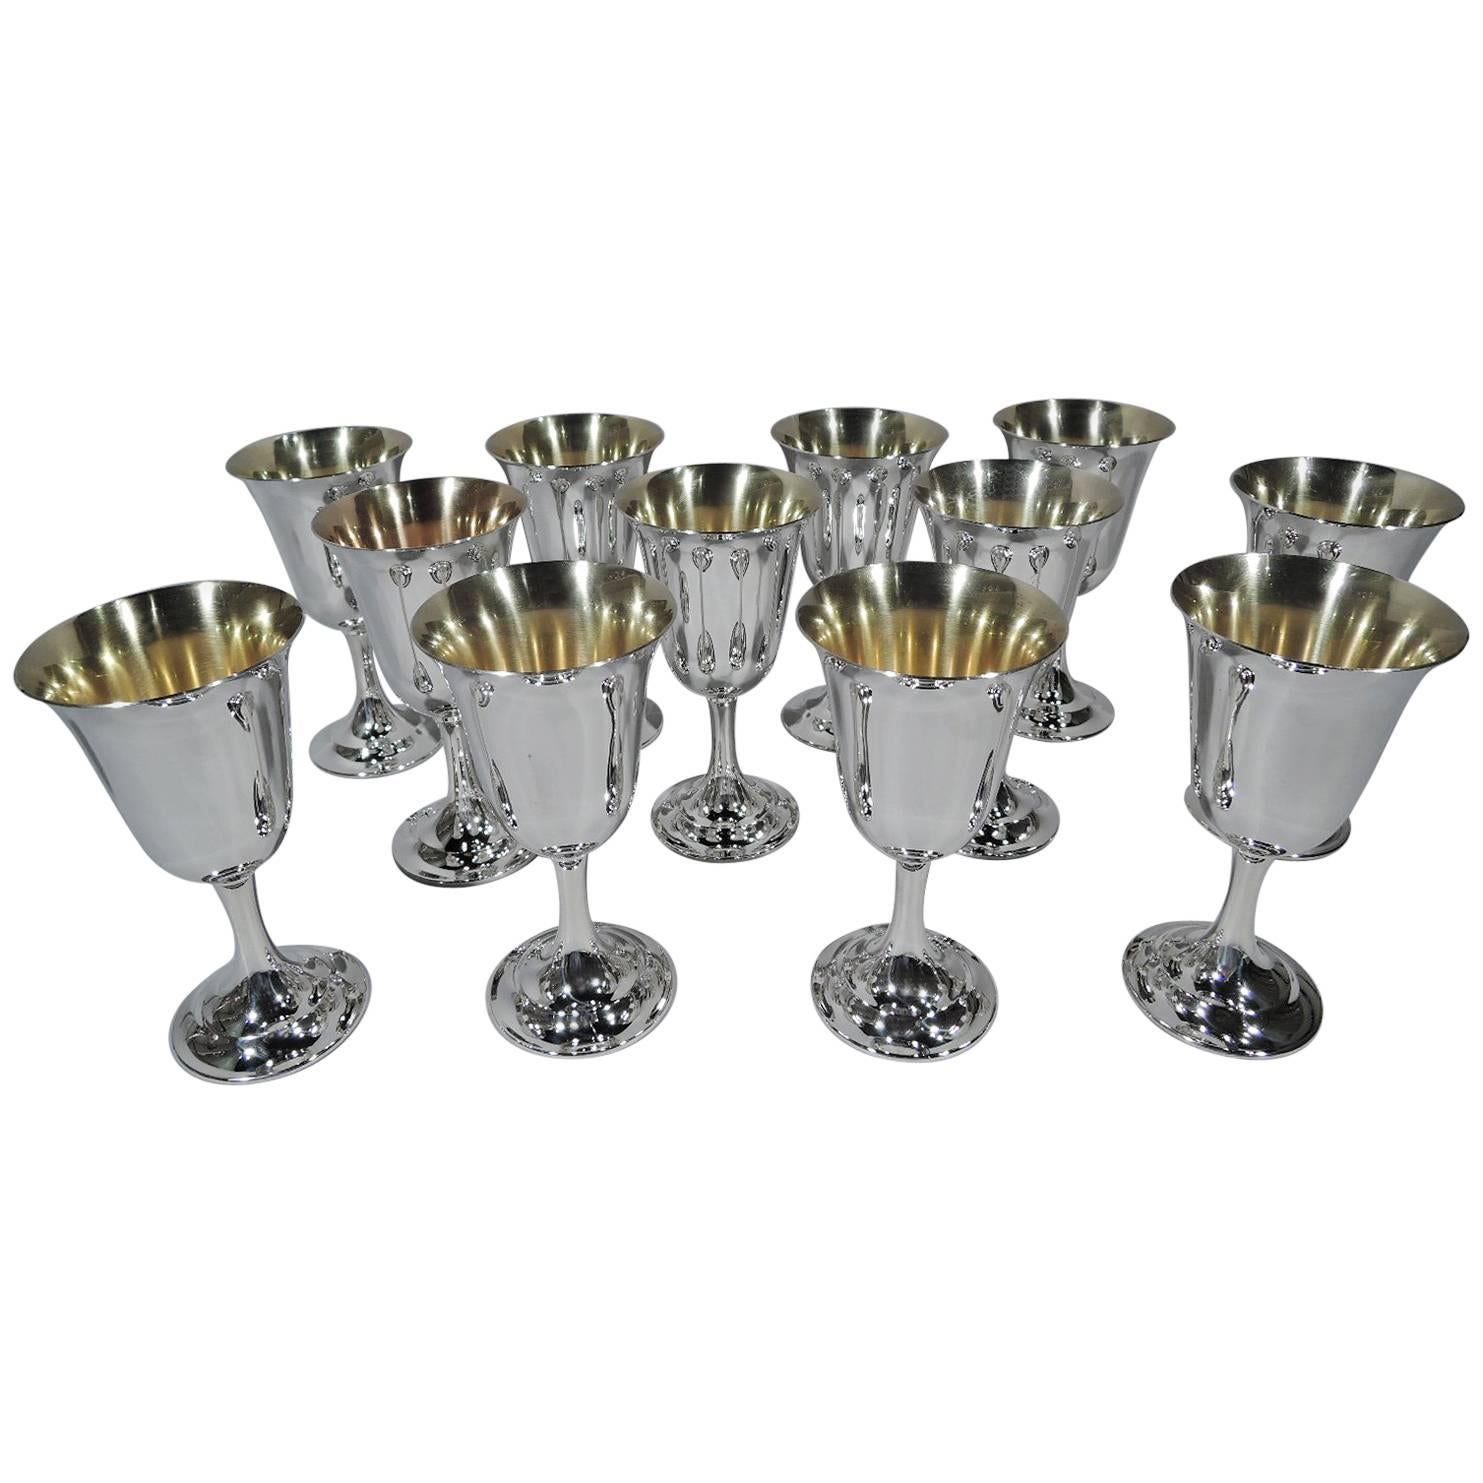 Set of 12 International Lord Saybrook Sterling Silver Goblets